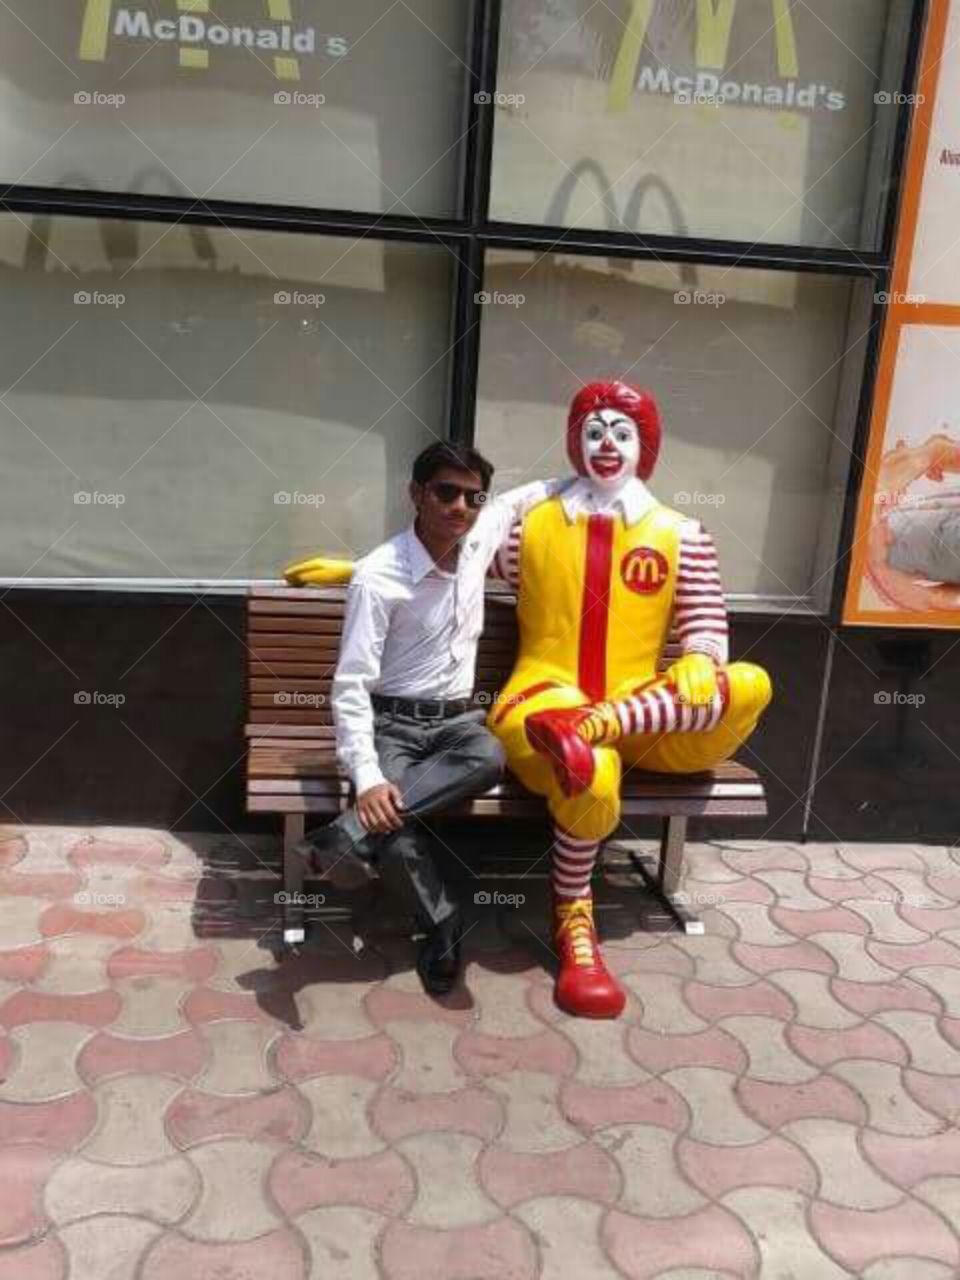 photo with McDonald's